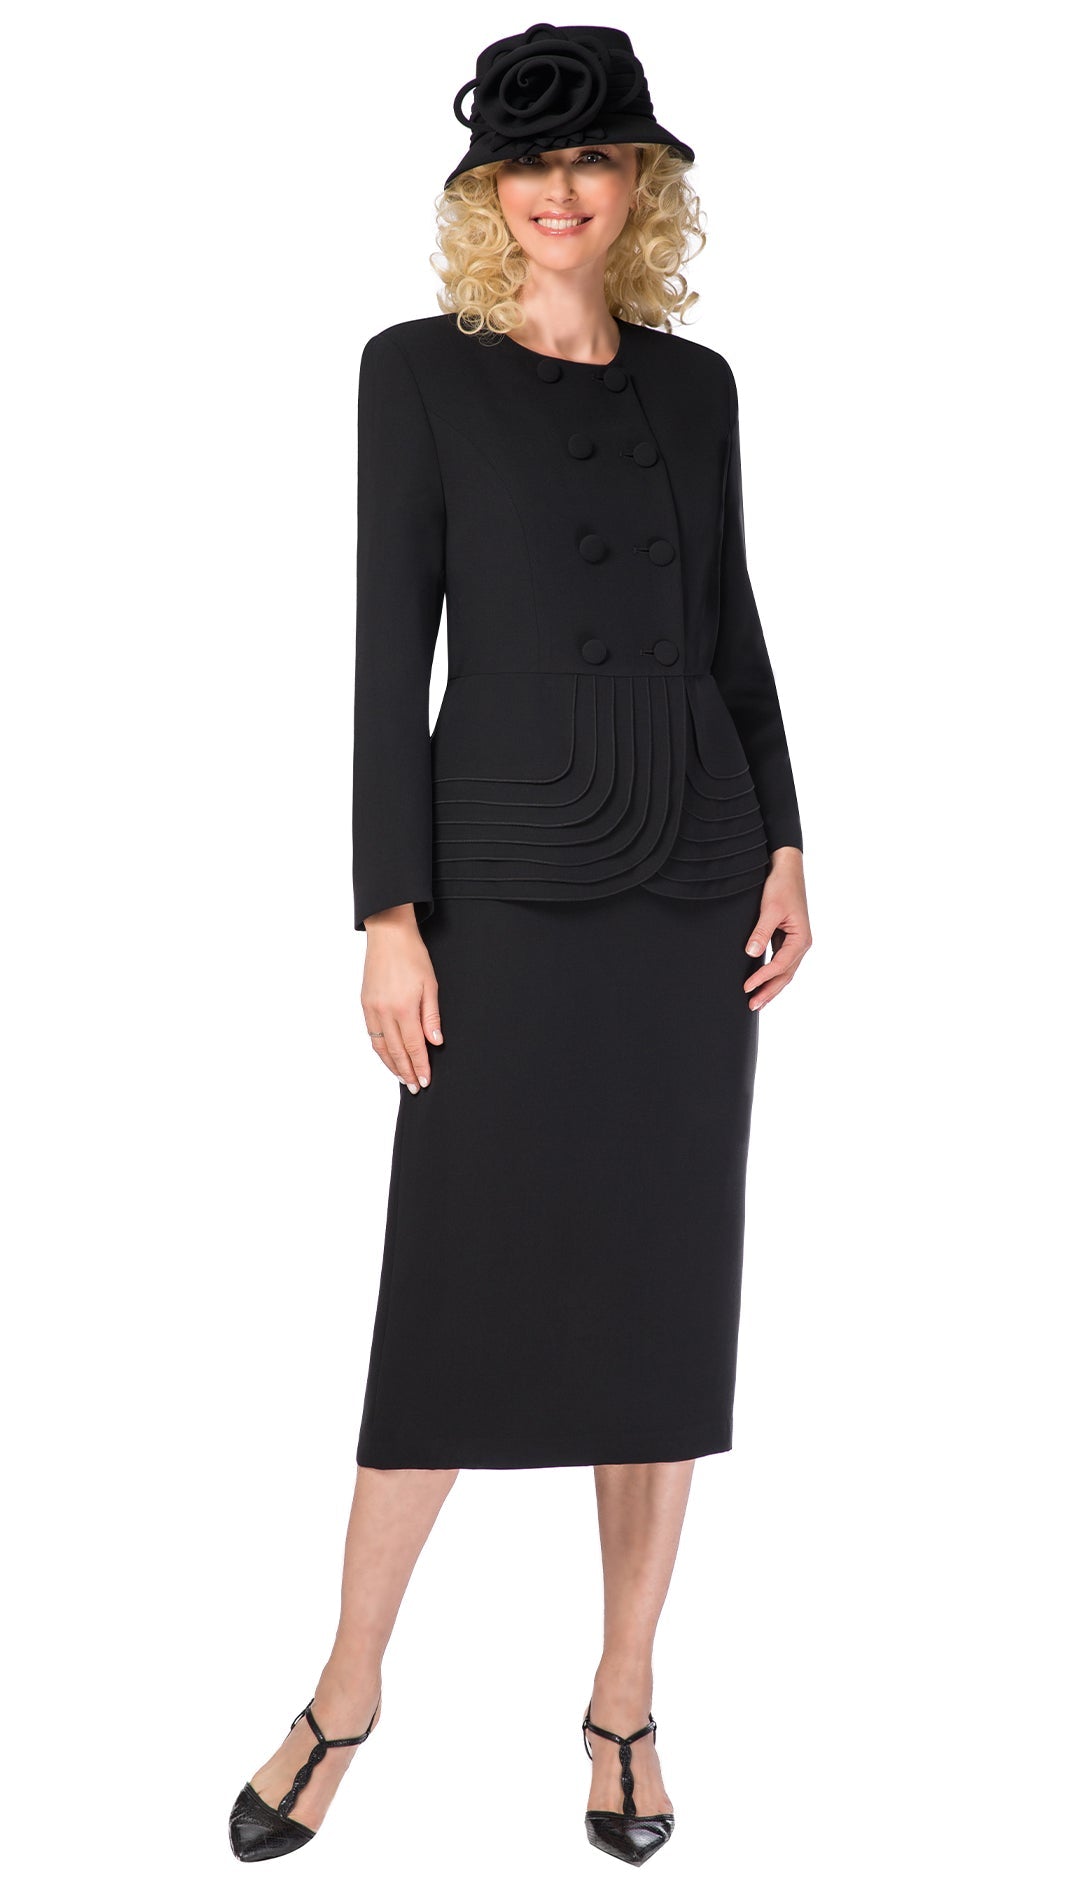 Giovanna Suit 0902C-Black - Church Suits For Less